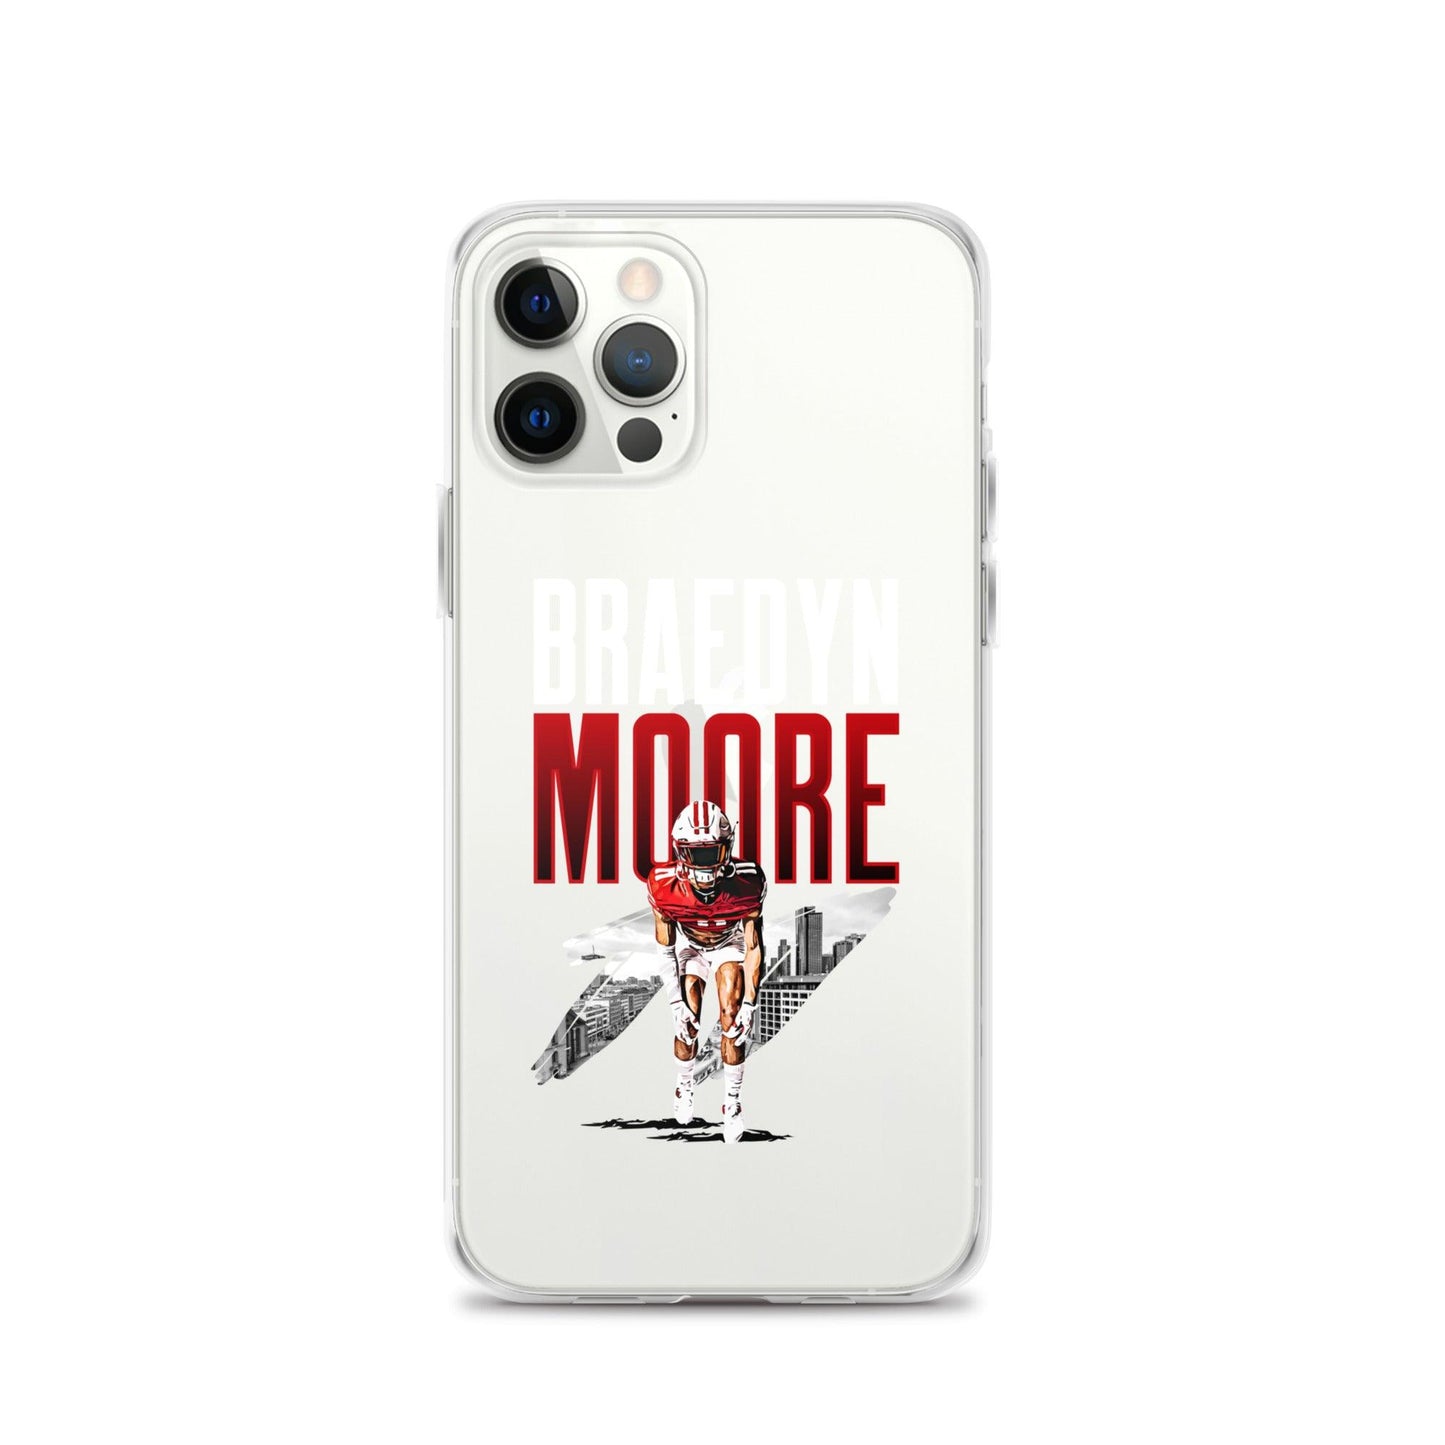 Braedyn Moore "Gameday" iPhone Case - Fan Arch